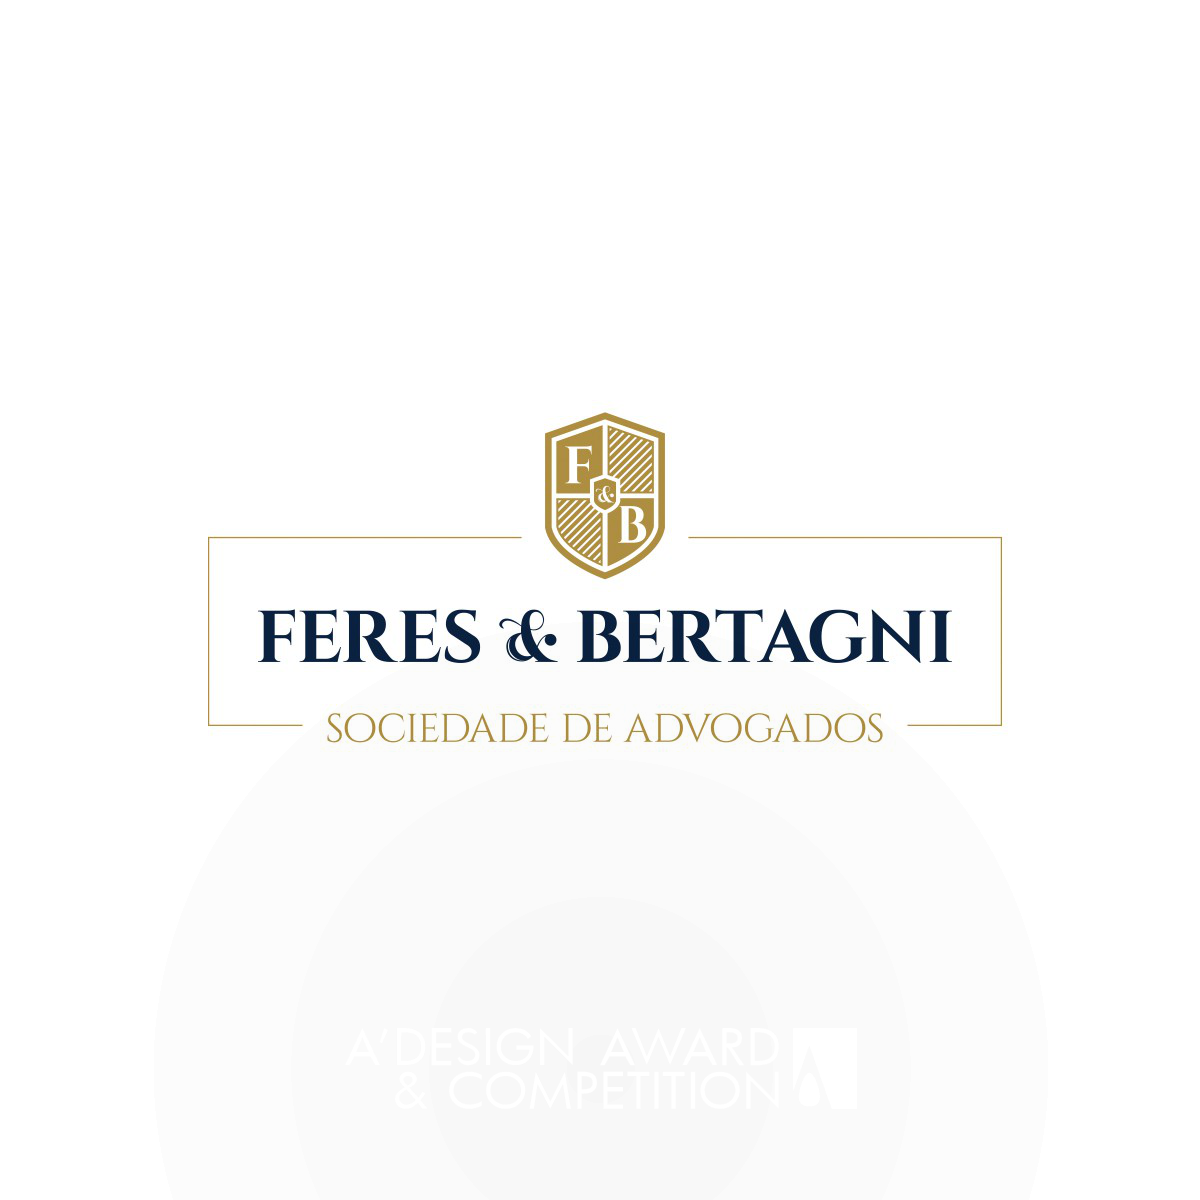 Feres & Bertagni Sociedade de Advogados